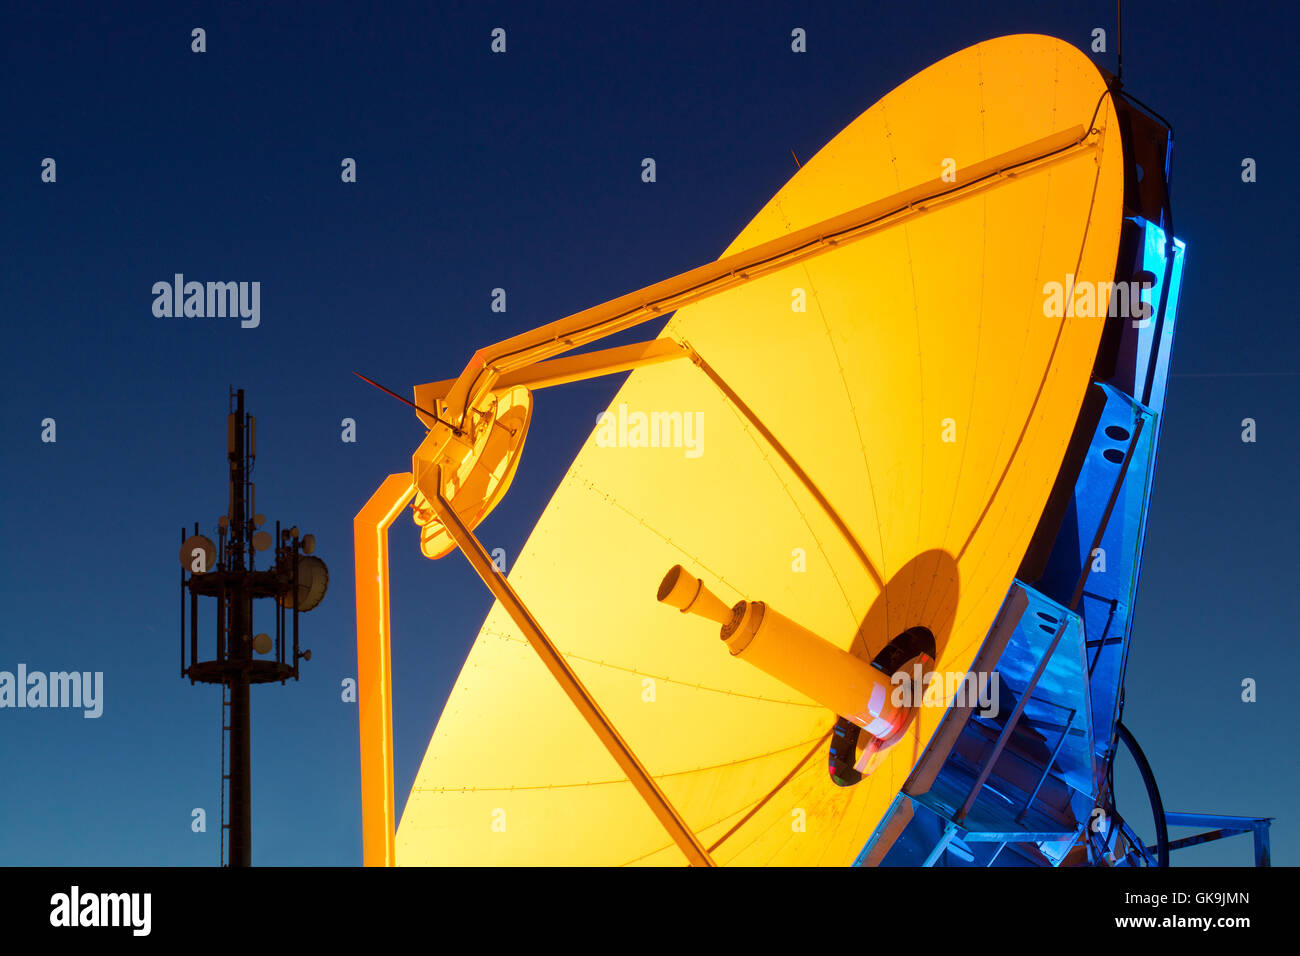 communication antennae reflector Stock Photo